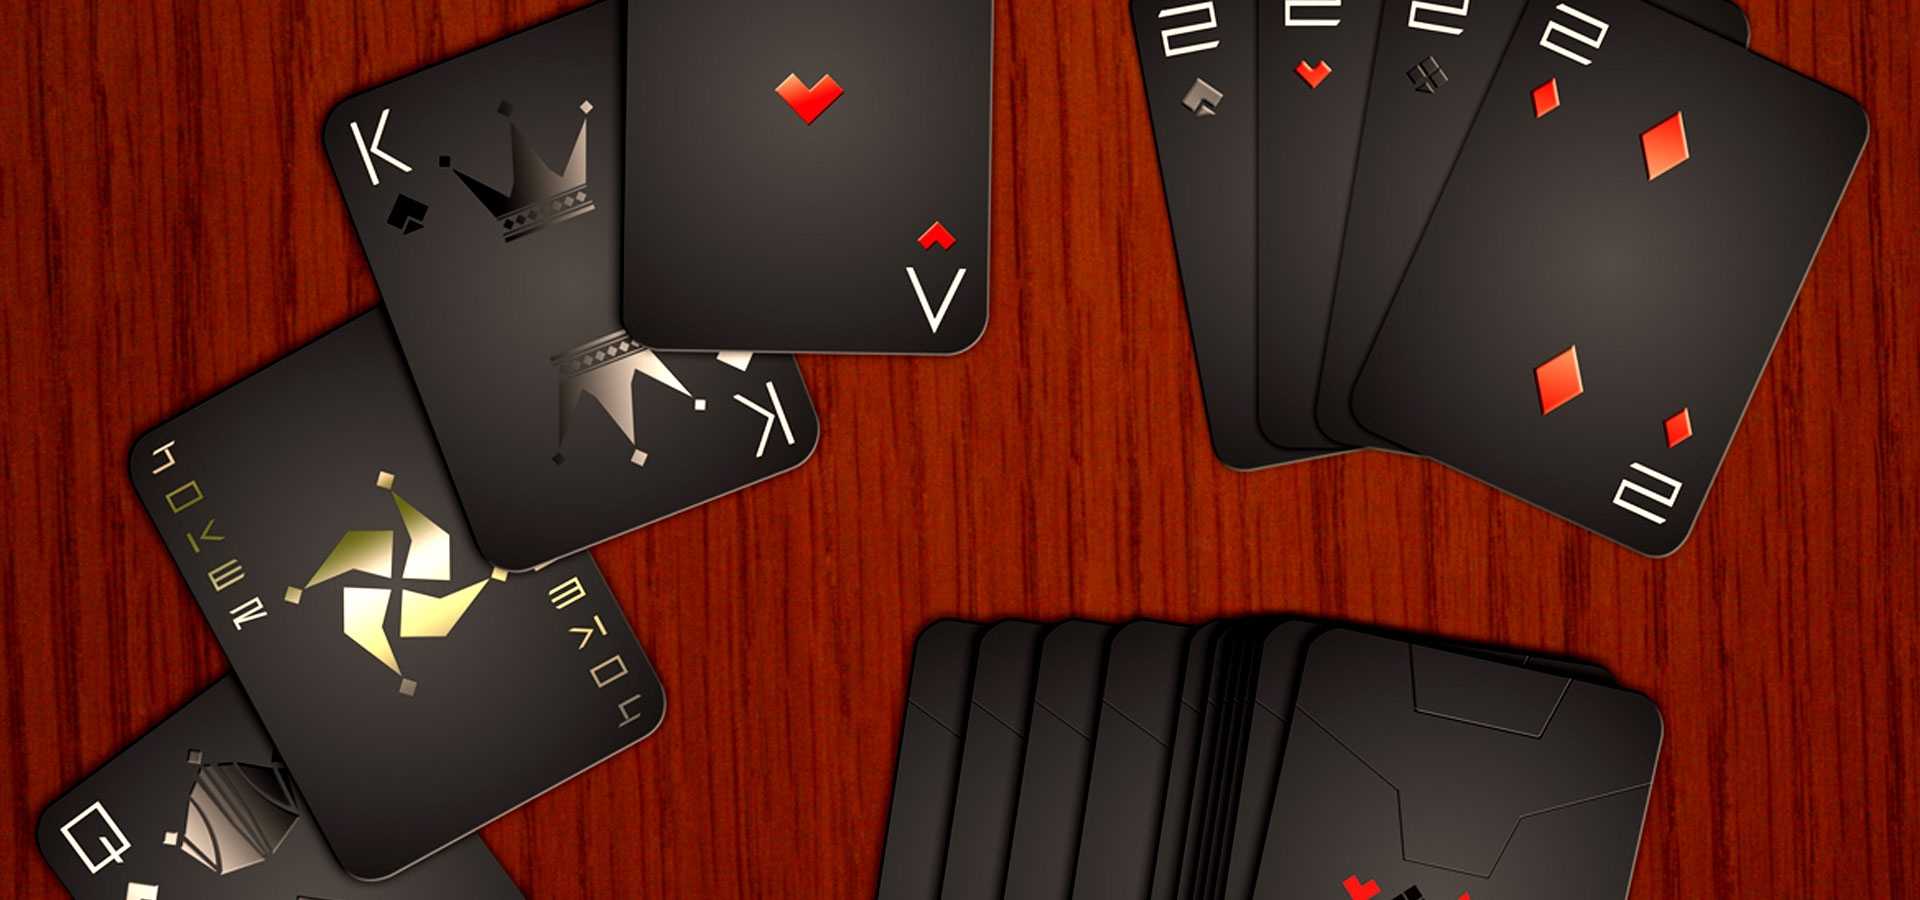 22+ Playing Card Designs | Free & Premium Templates Inside Playing Card Design Template